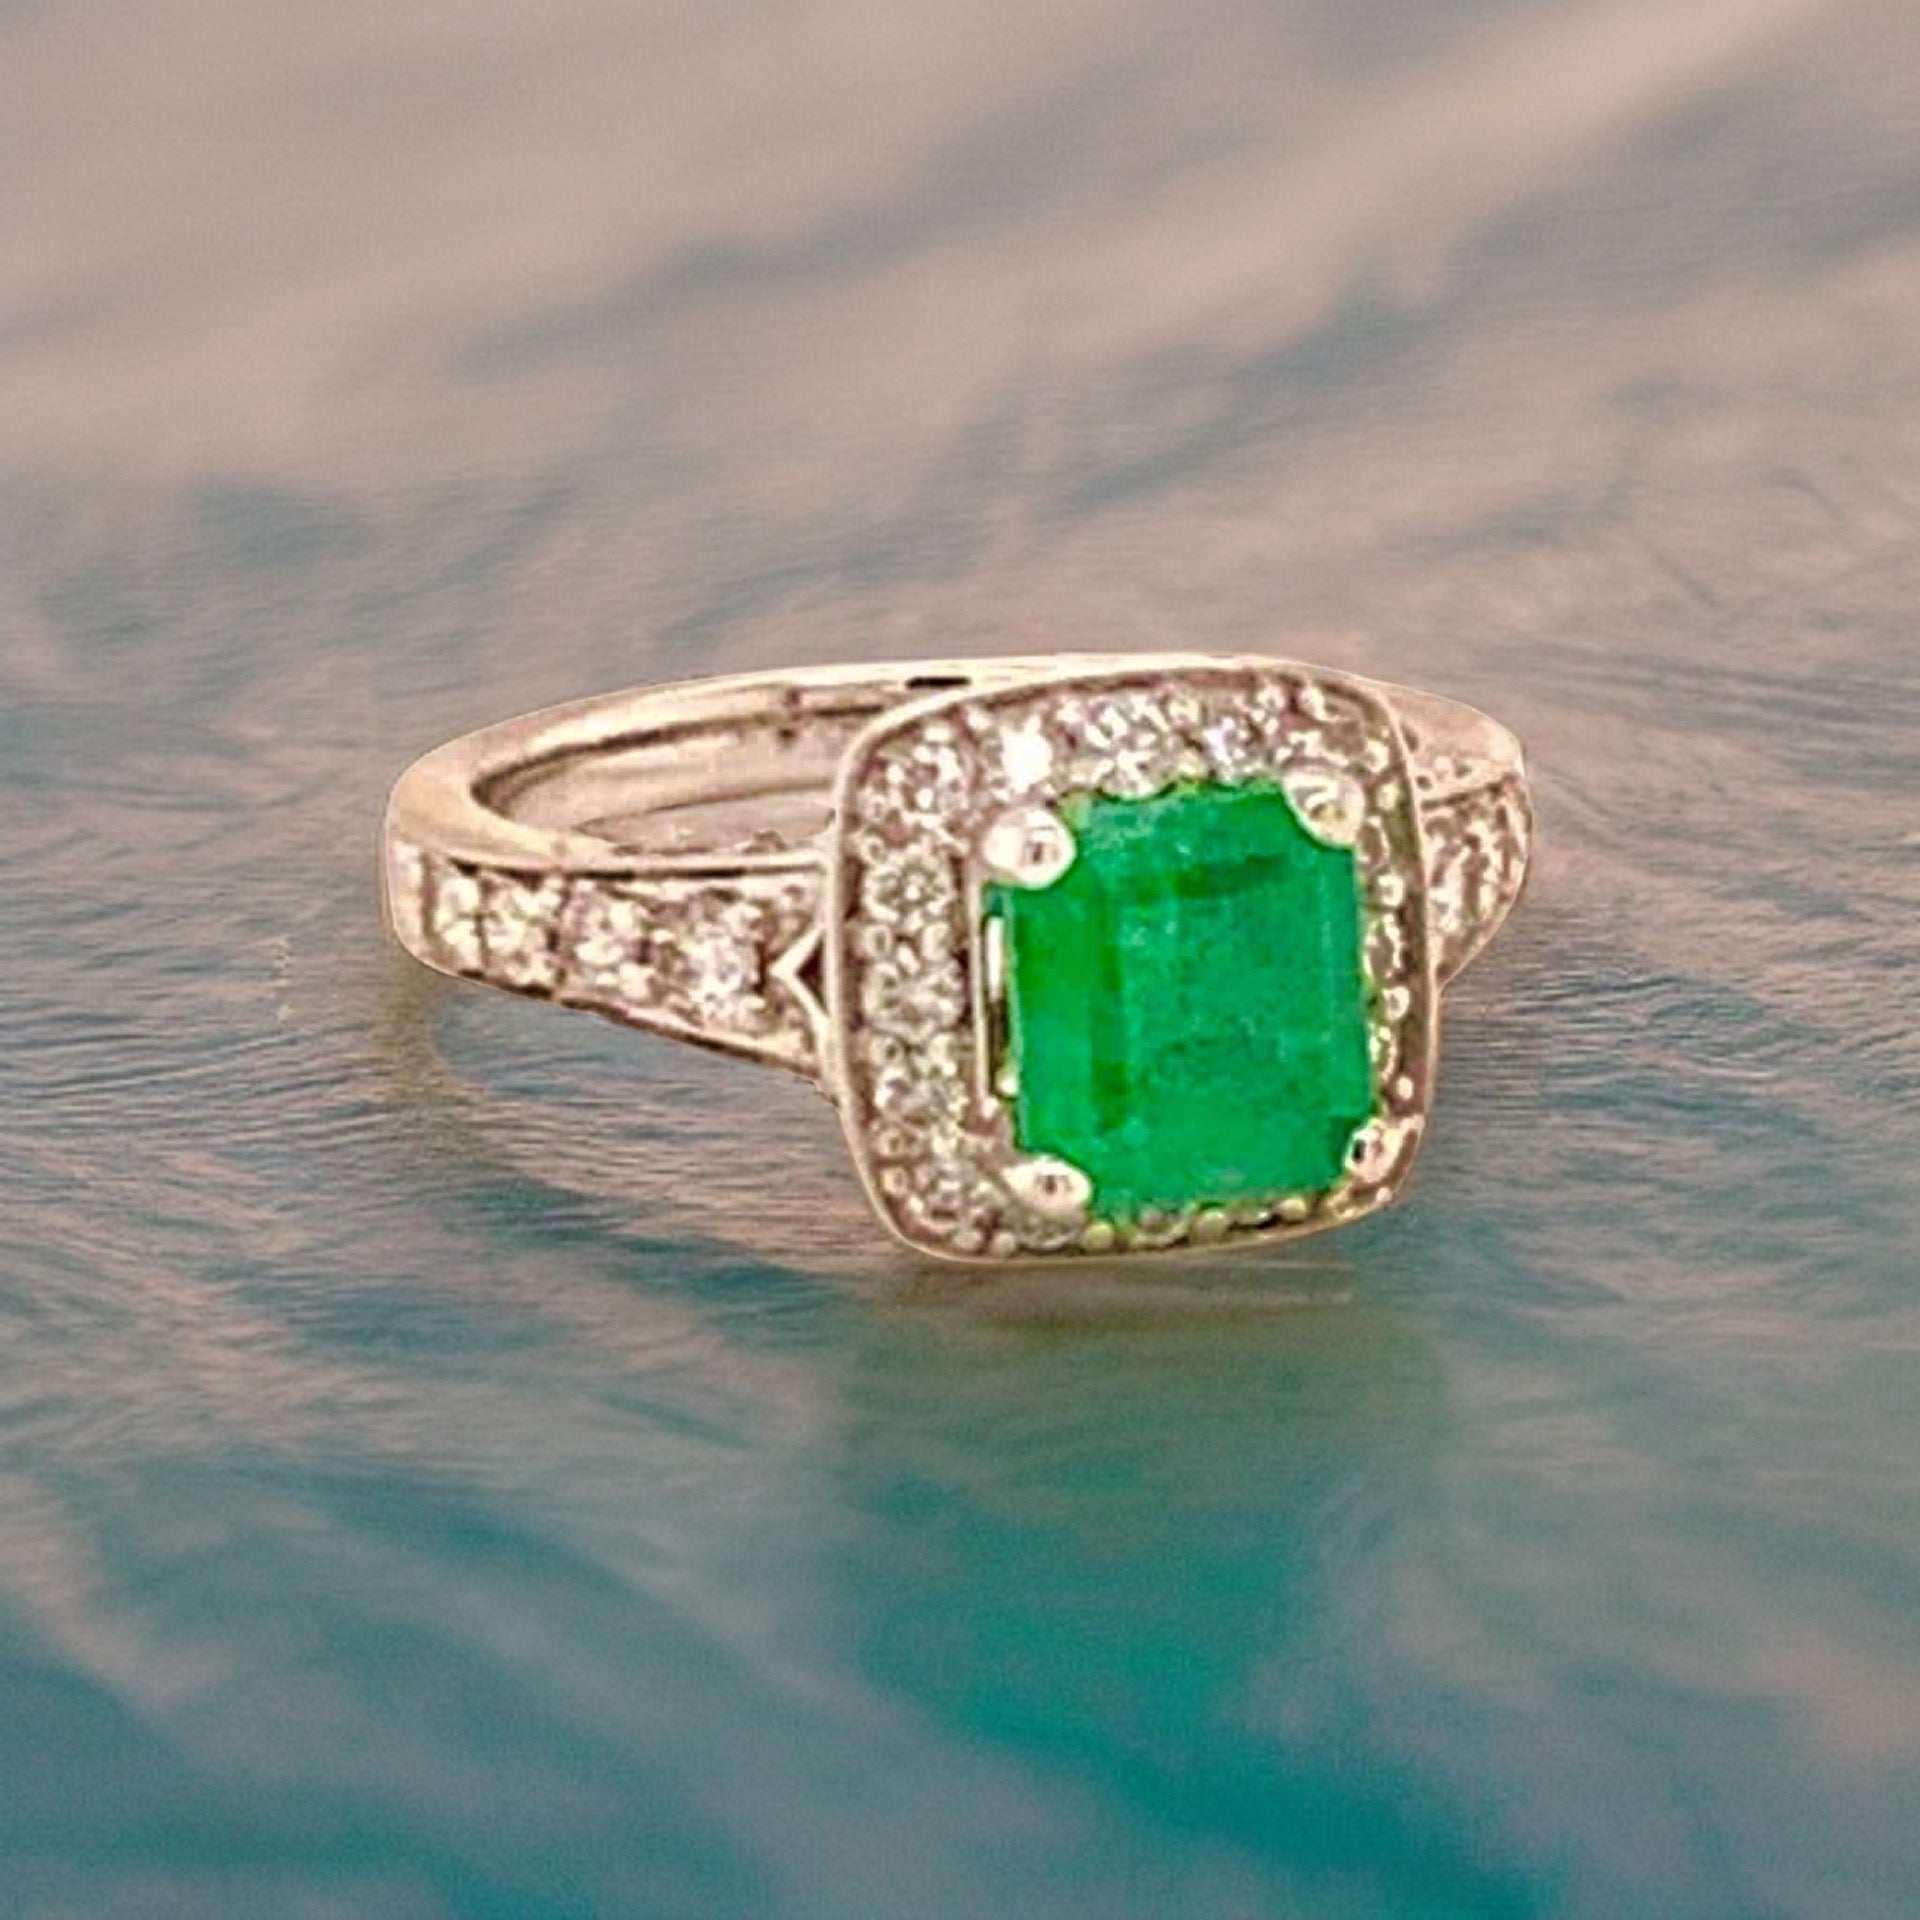 Diamond Emerald Ring 14k Gold 1.40 TCW Certified $4,950 920938 - Certified Fine Jewelry